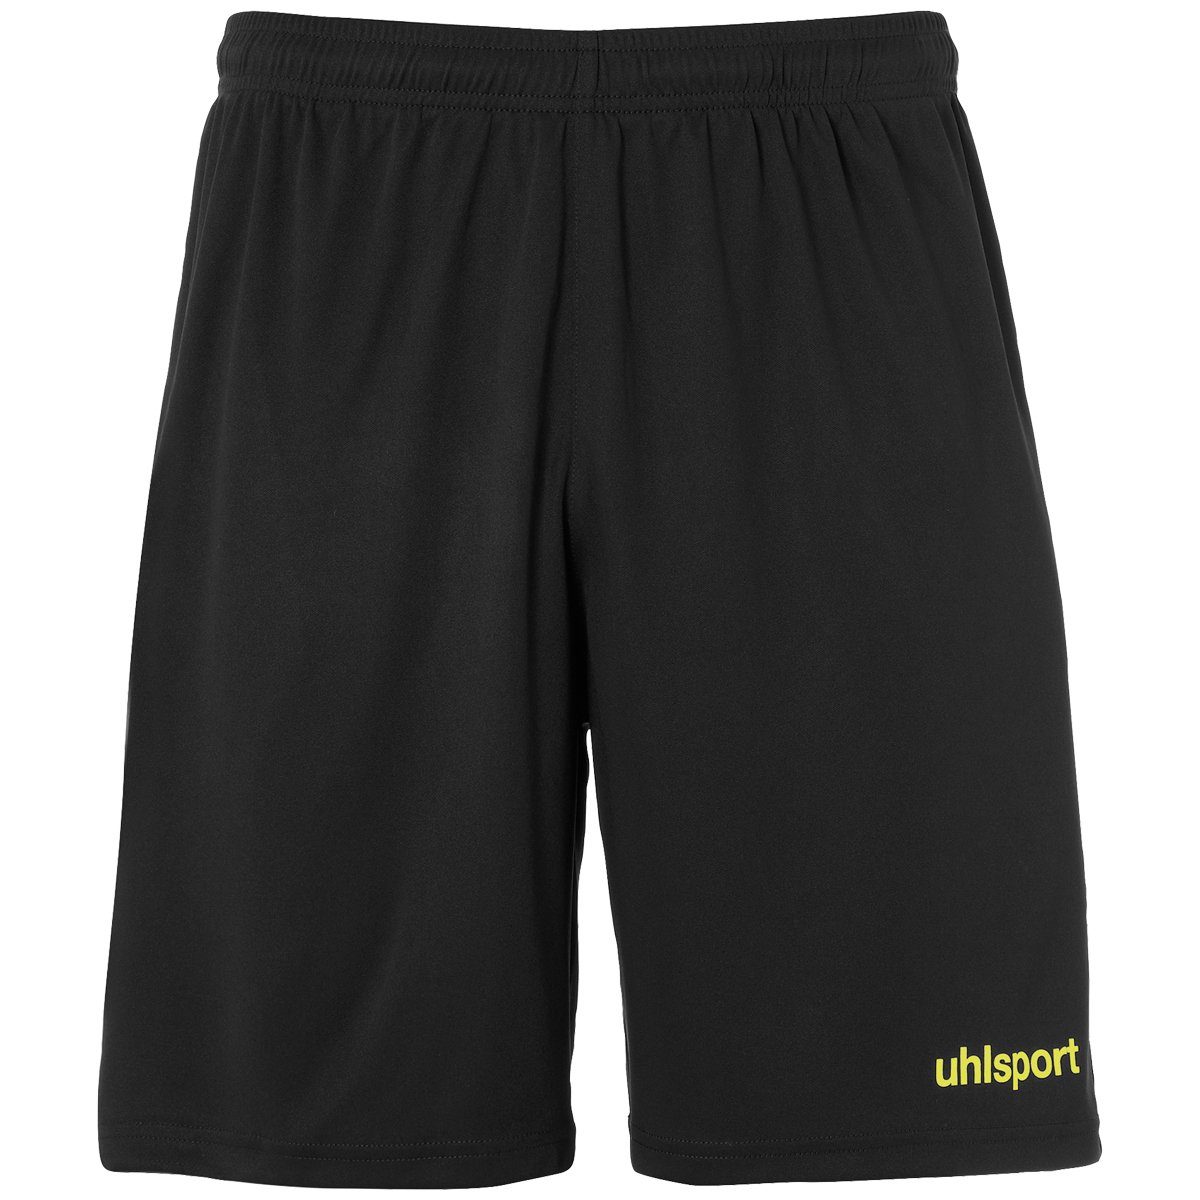 Shorts Shorts schwarz/fluo uhlsport uhlsport gelb